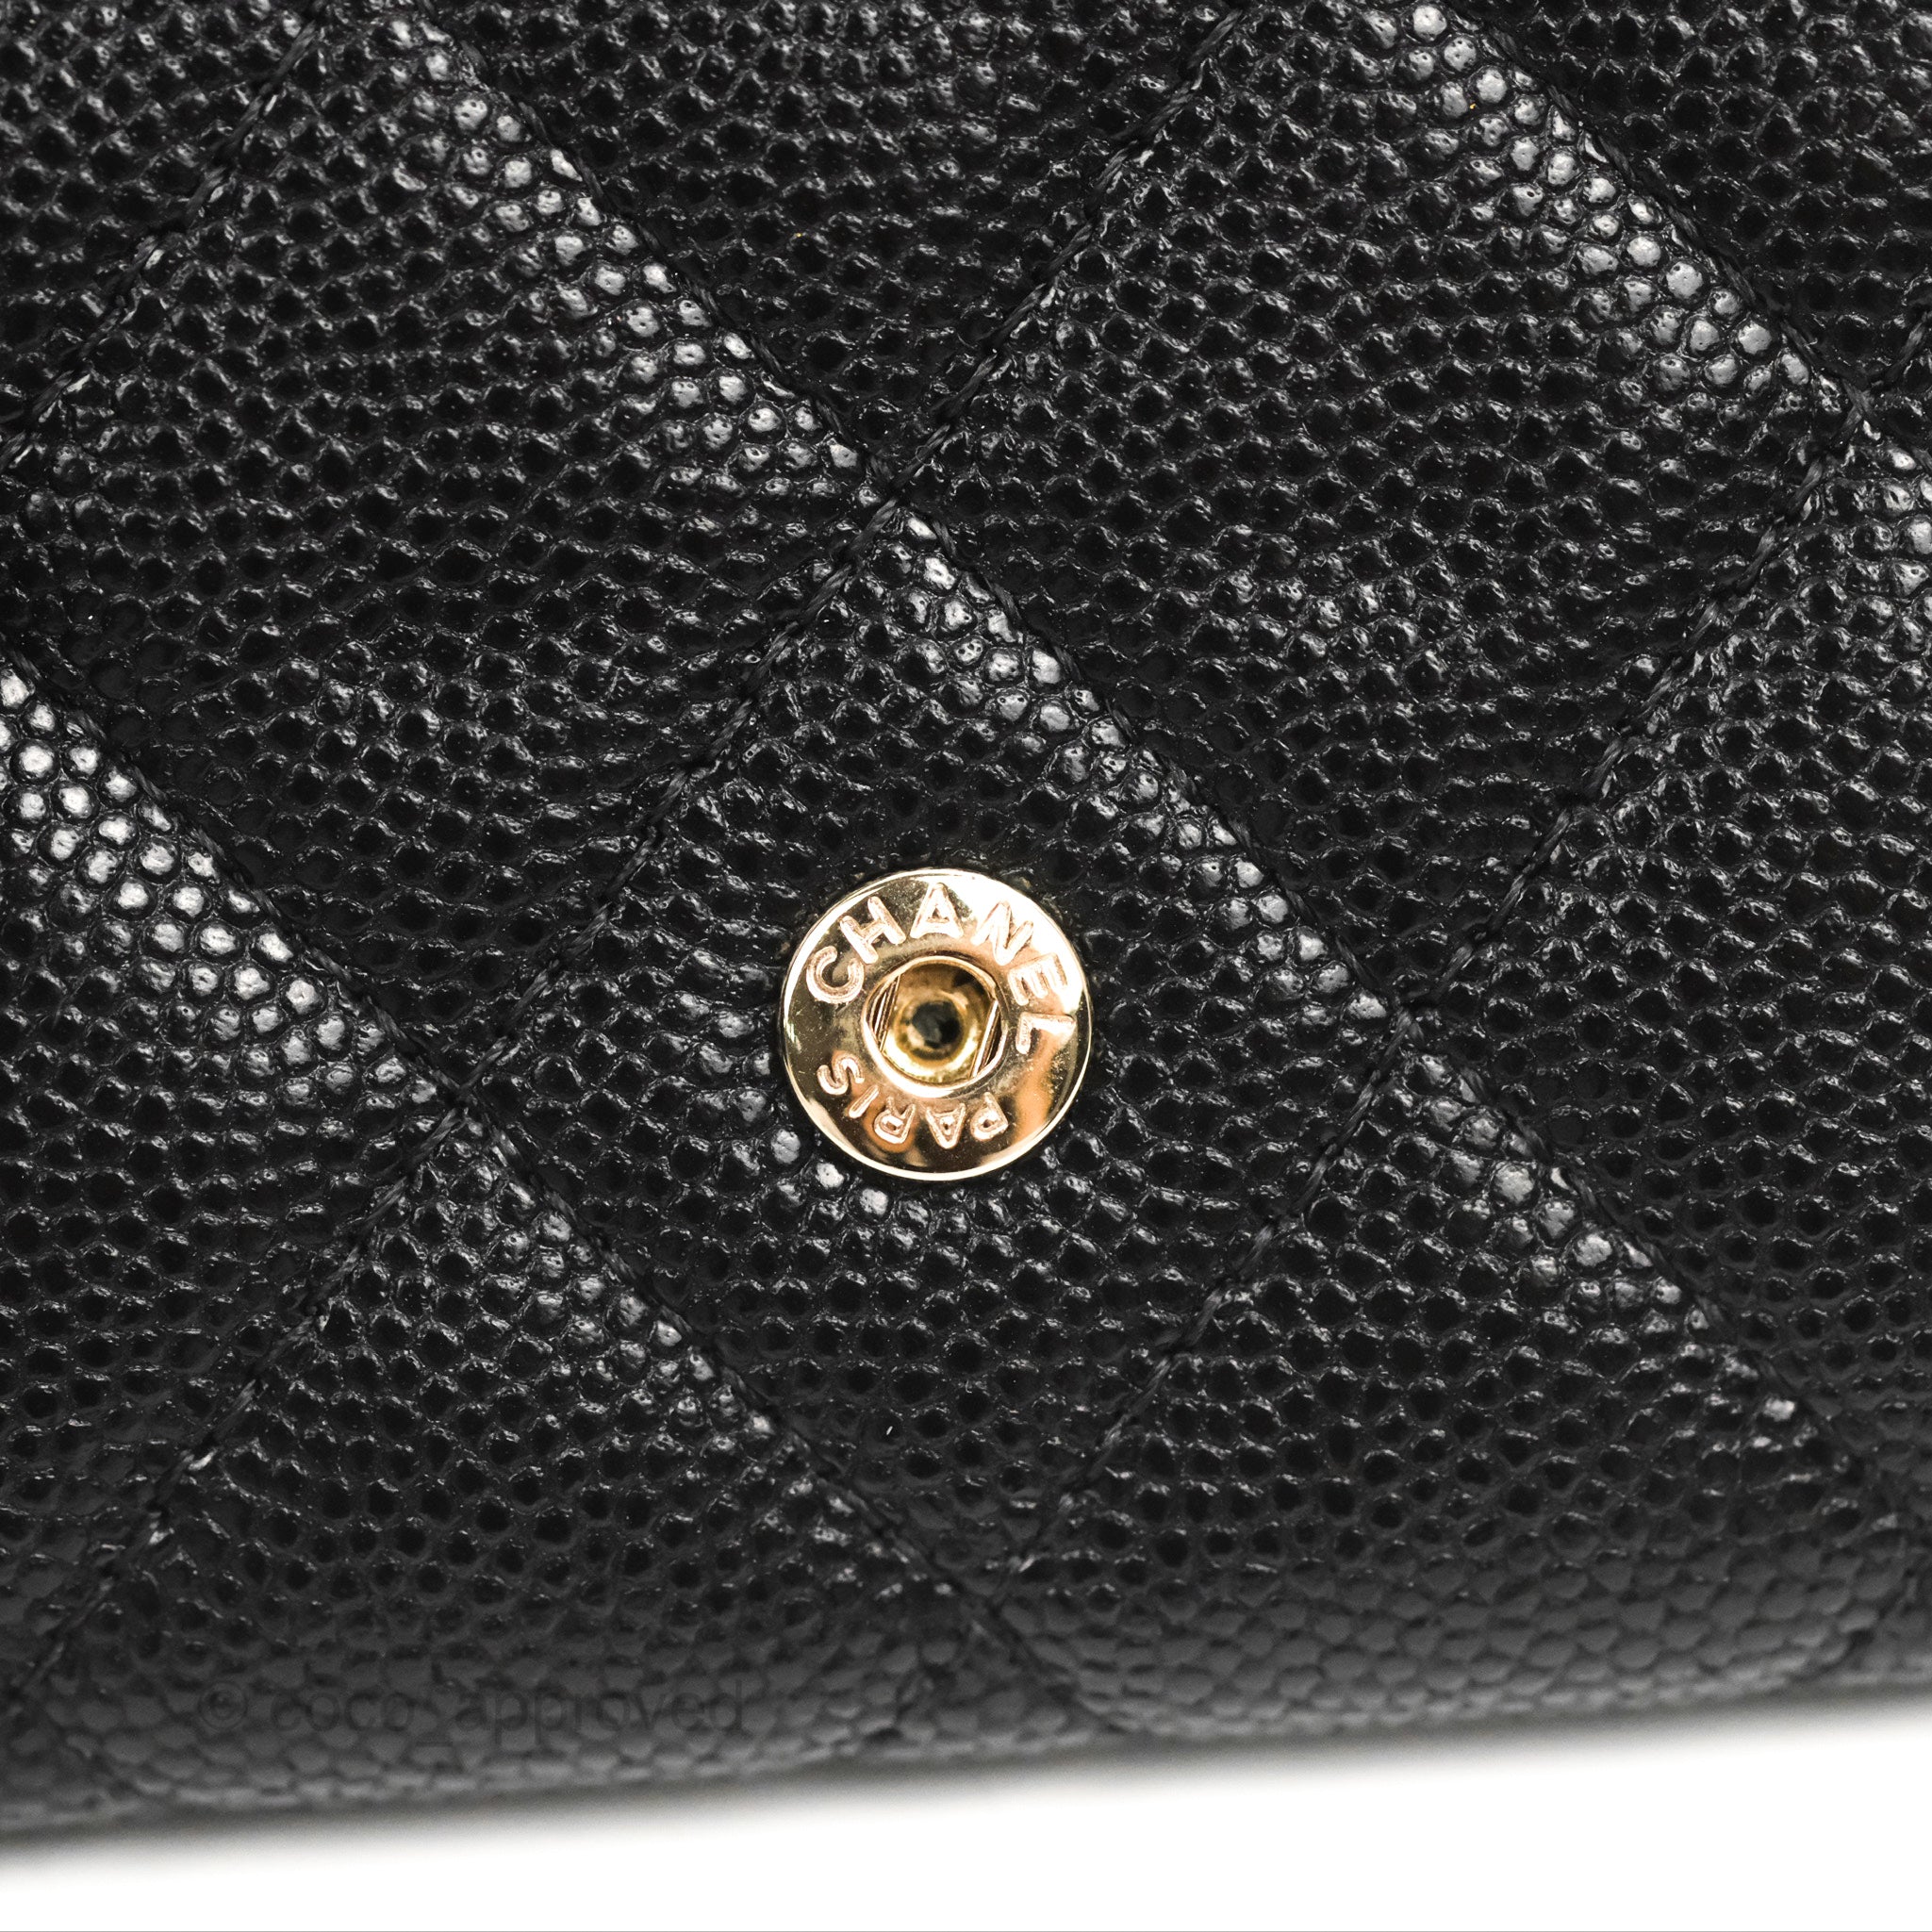 CHANEL Coins Black Bags & Handbags for Women